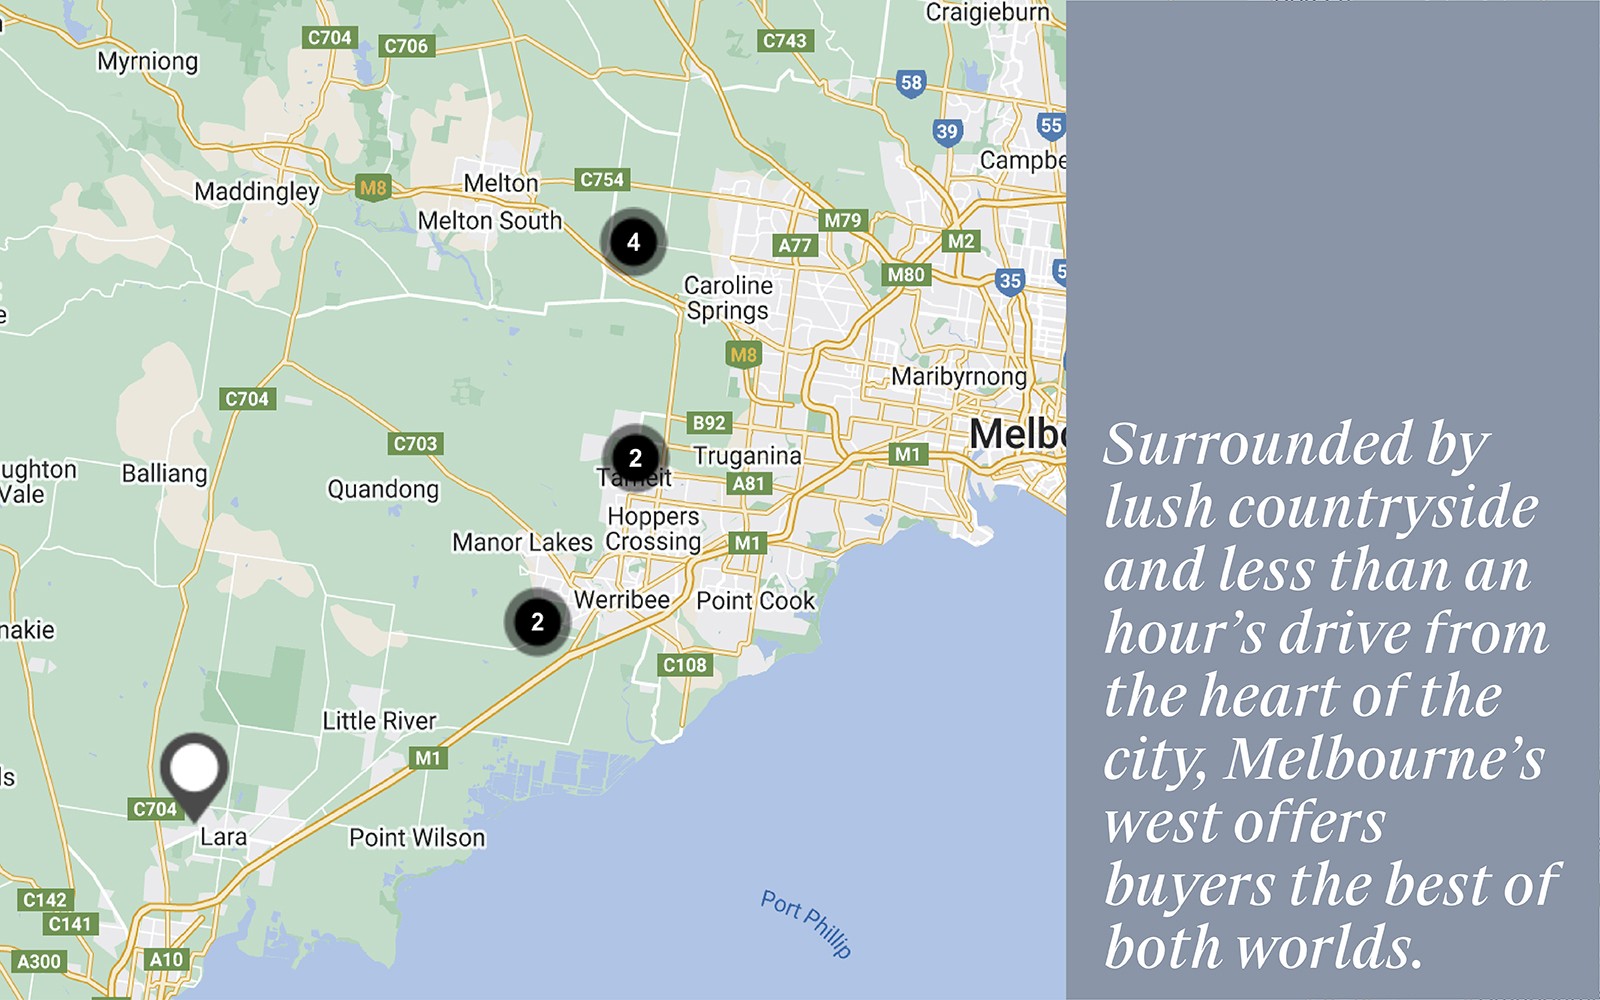 Want-the-Best-Think-Melbournes-West-carlisle-homes-graphic3-v3__Resampled.jpg